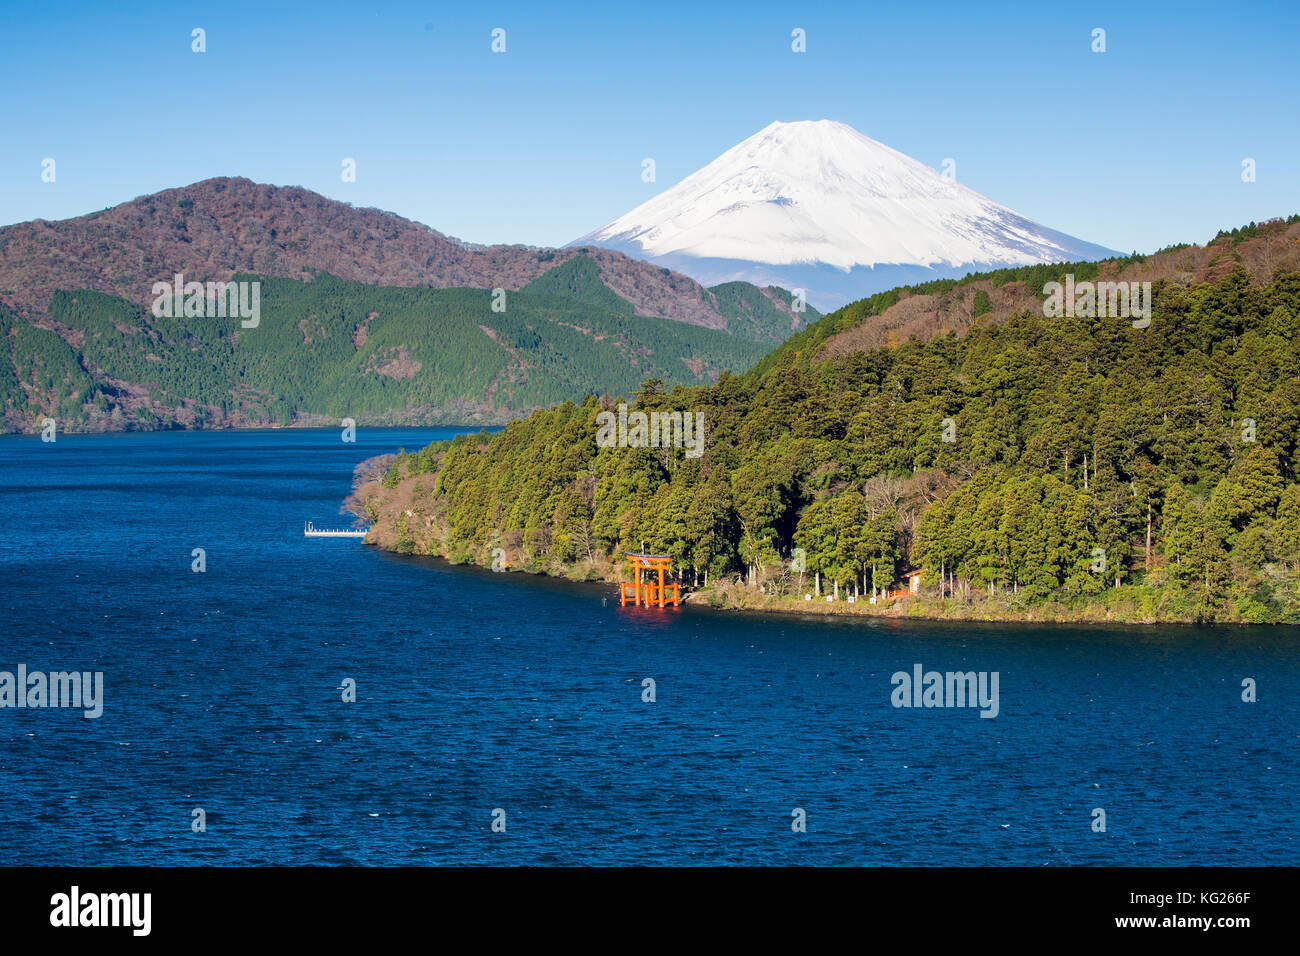 Lake Ashinoko with Mount Fuji behind, Fuji-Hakone-Izu National Park, Hakone, Shizuoka, Honshu, Japan, Asia Stock Photo